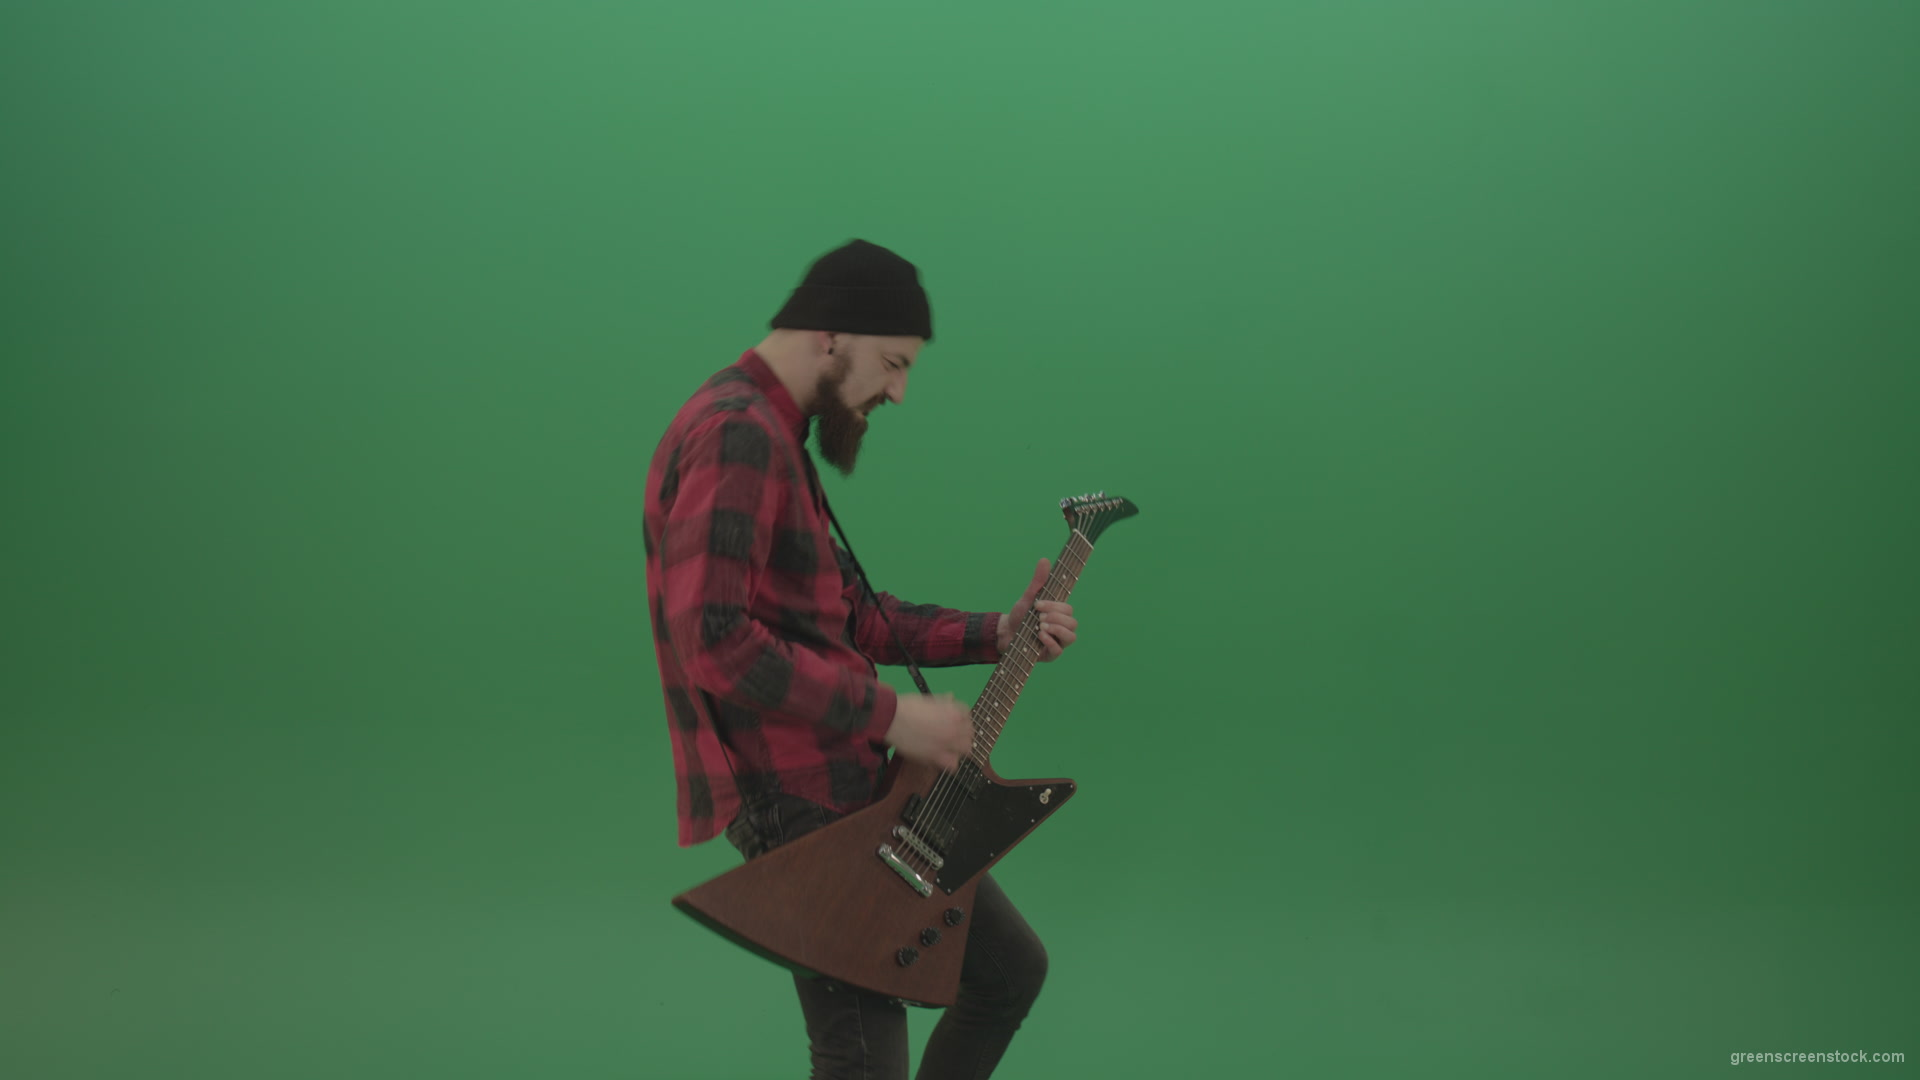 Man-punk-hardrock-guitarist-playing-guitar-in-side-view-in-green-screen-studio_006 Green Screen Stock